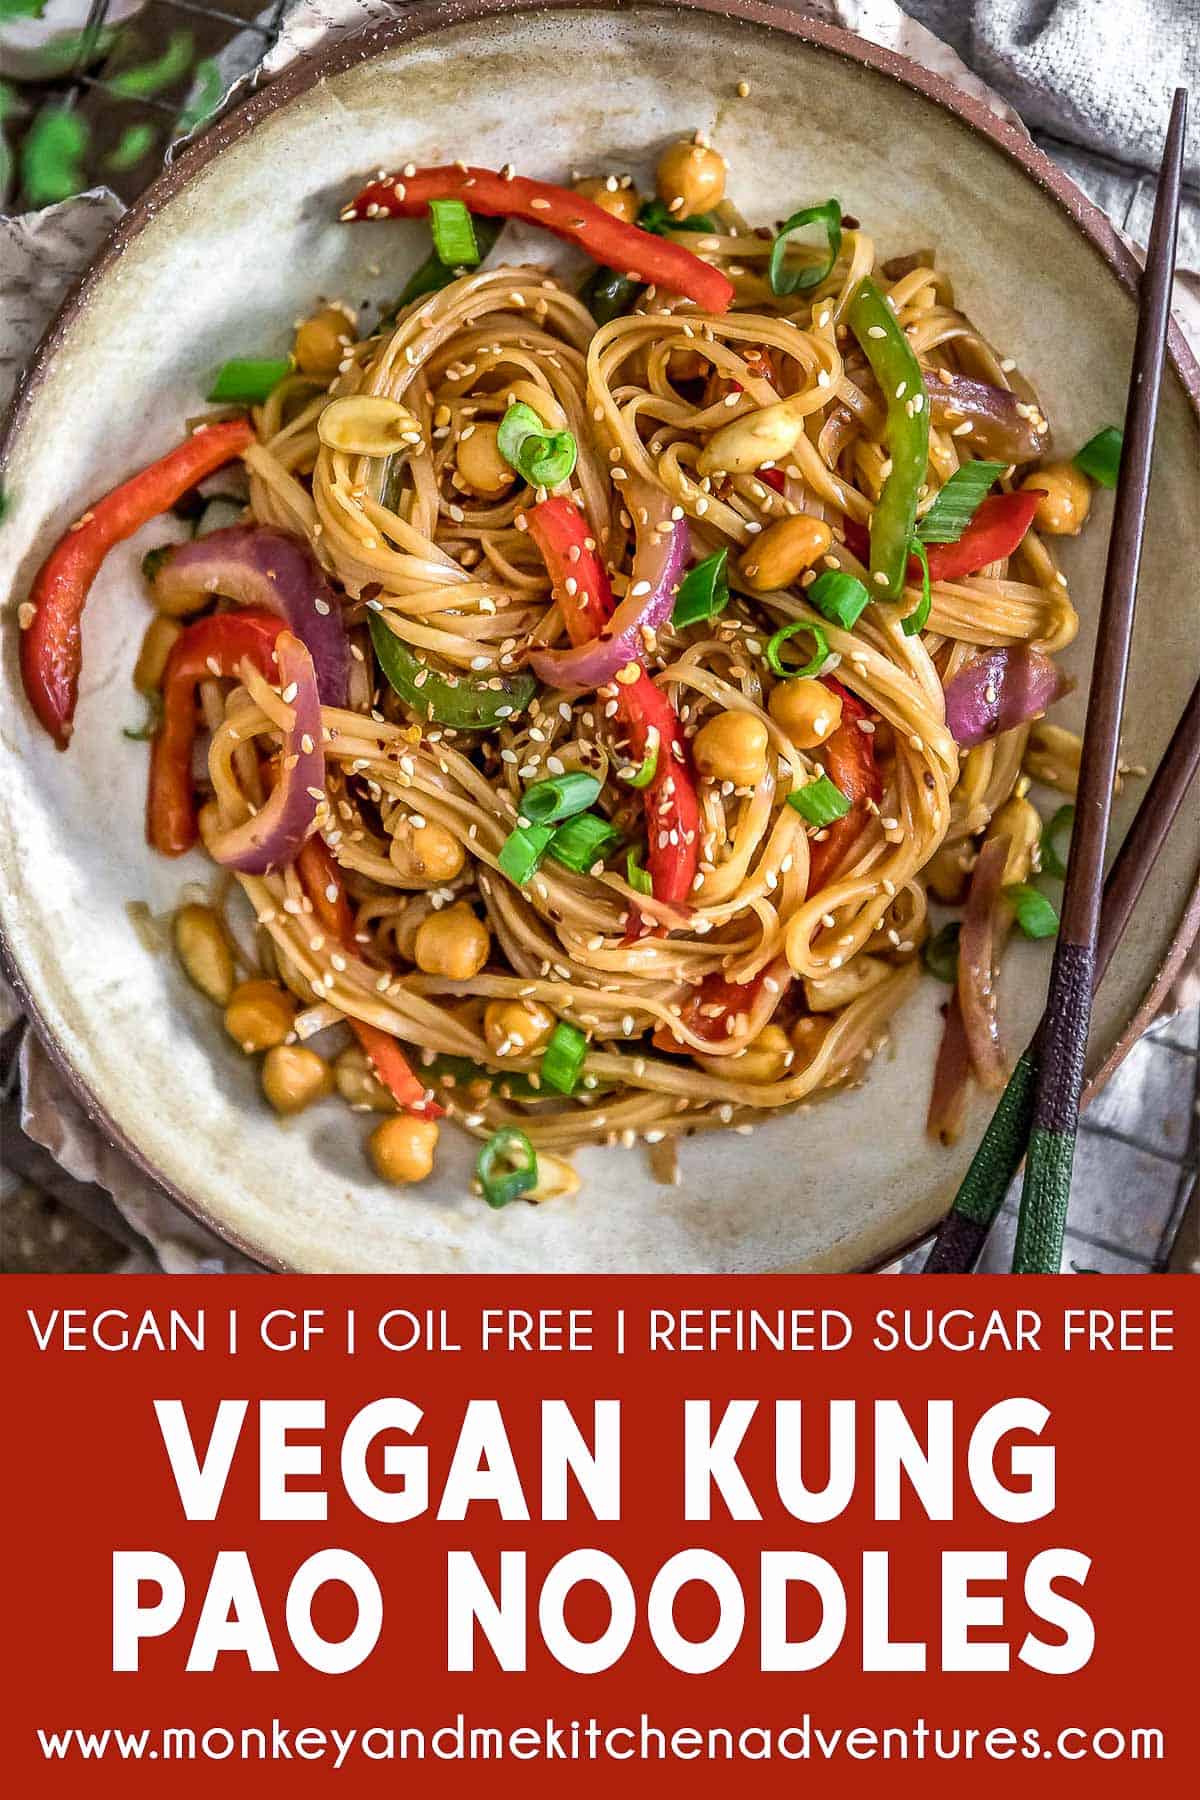 Vegan Kung Pao Noodles with text description